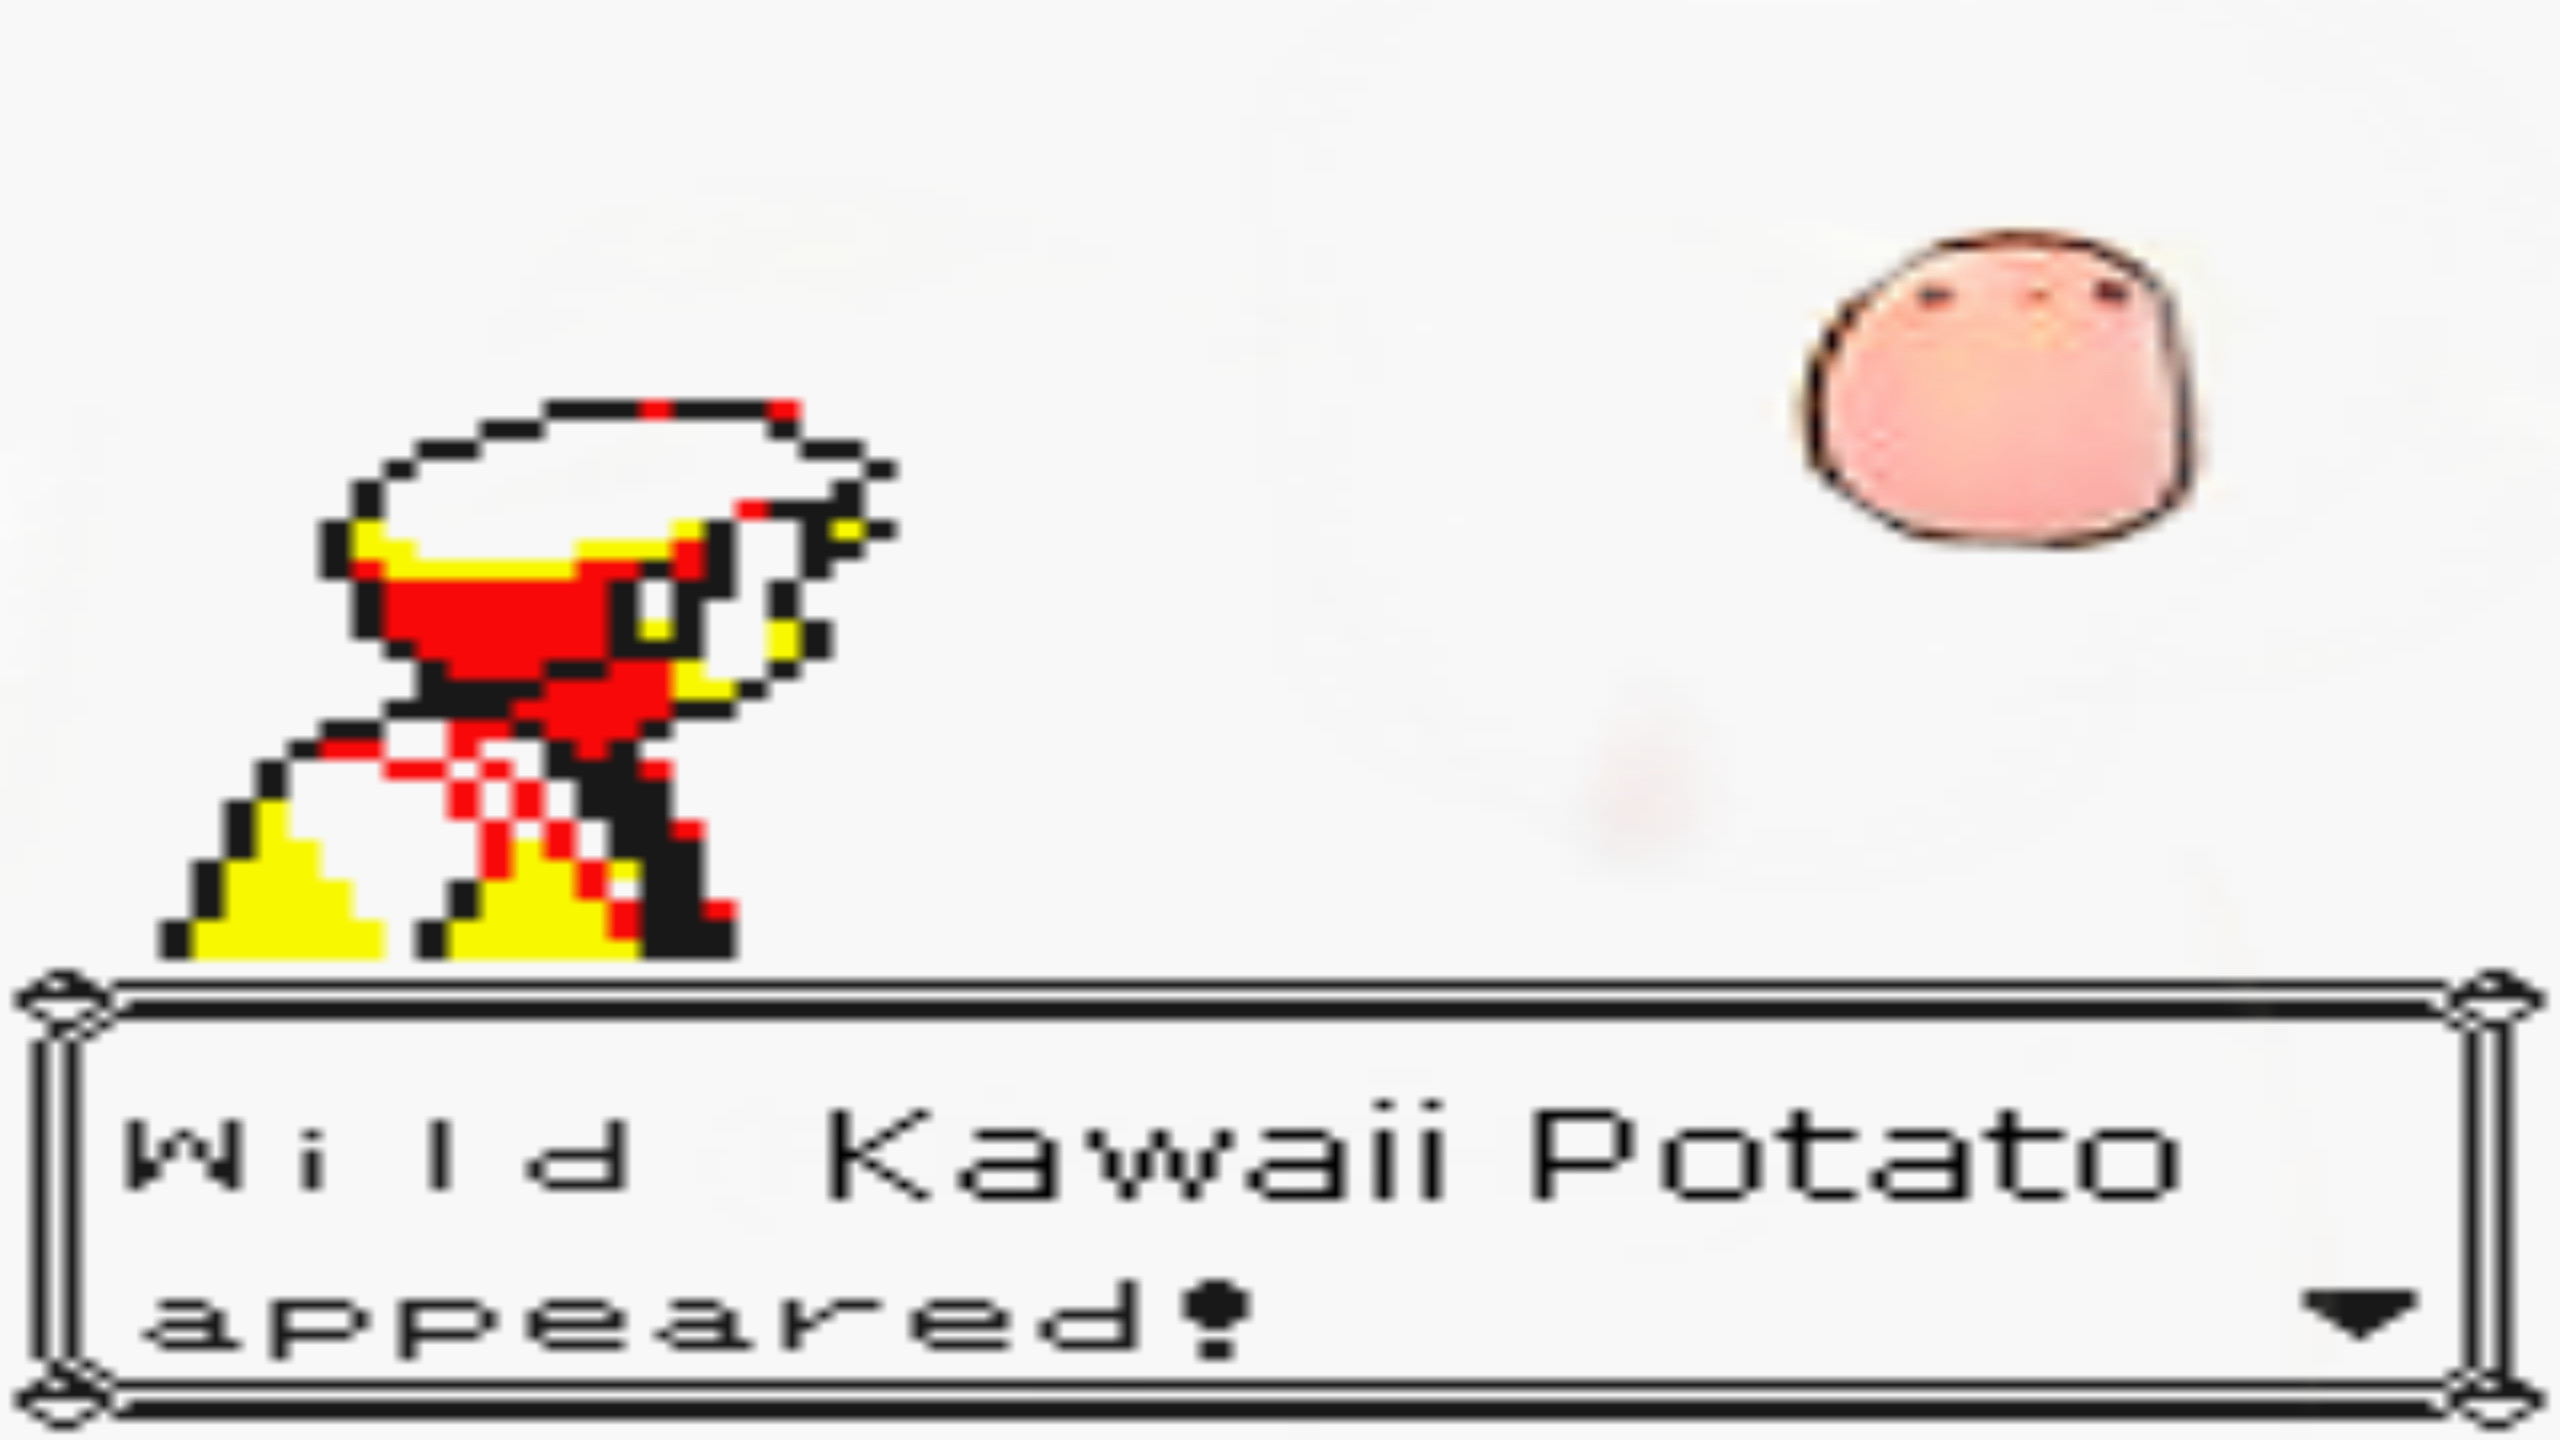 2560x1440 ... A Wild Kawaii Potato Appeared! by Will94182